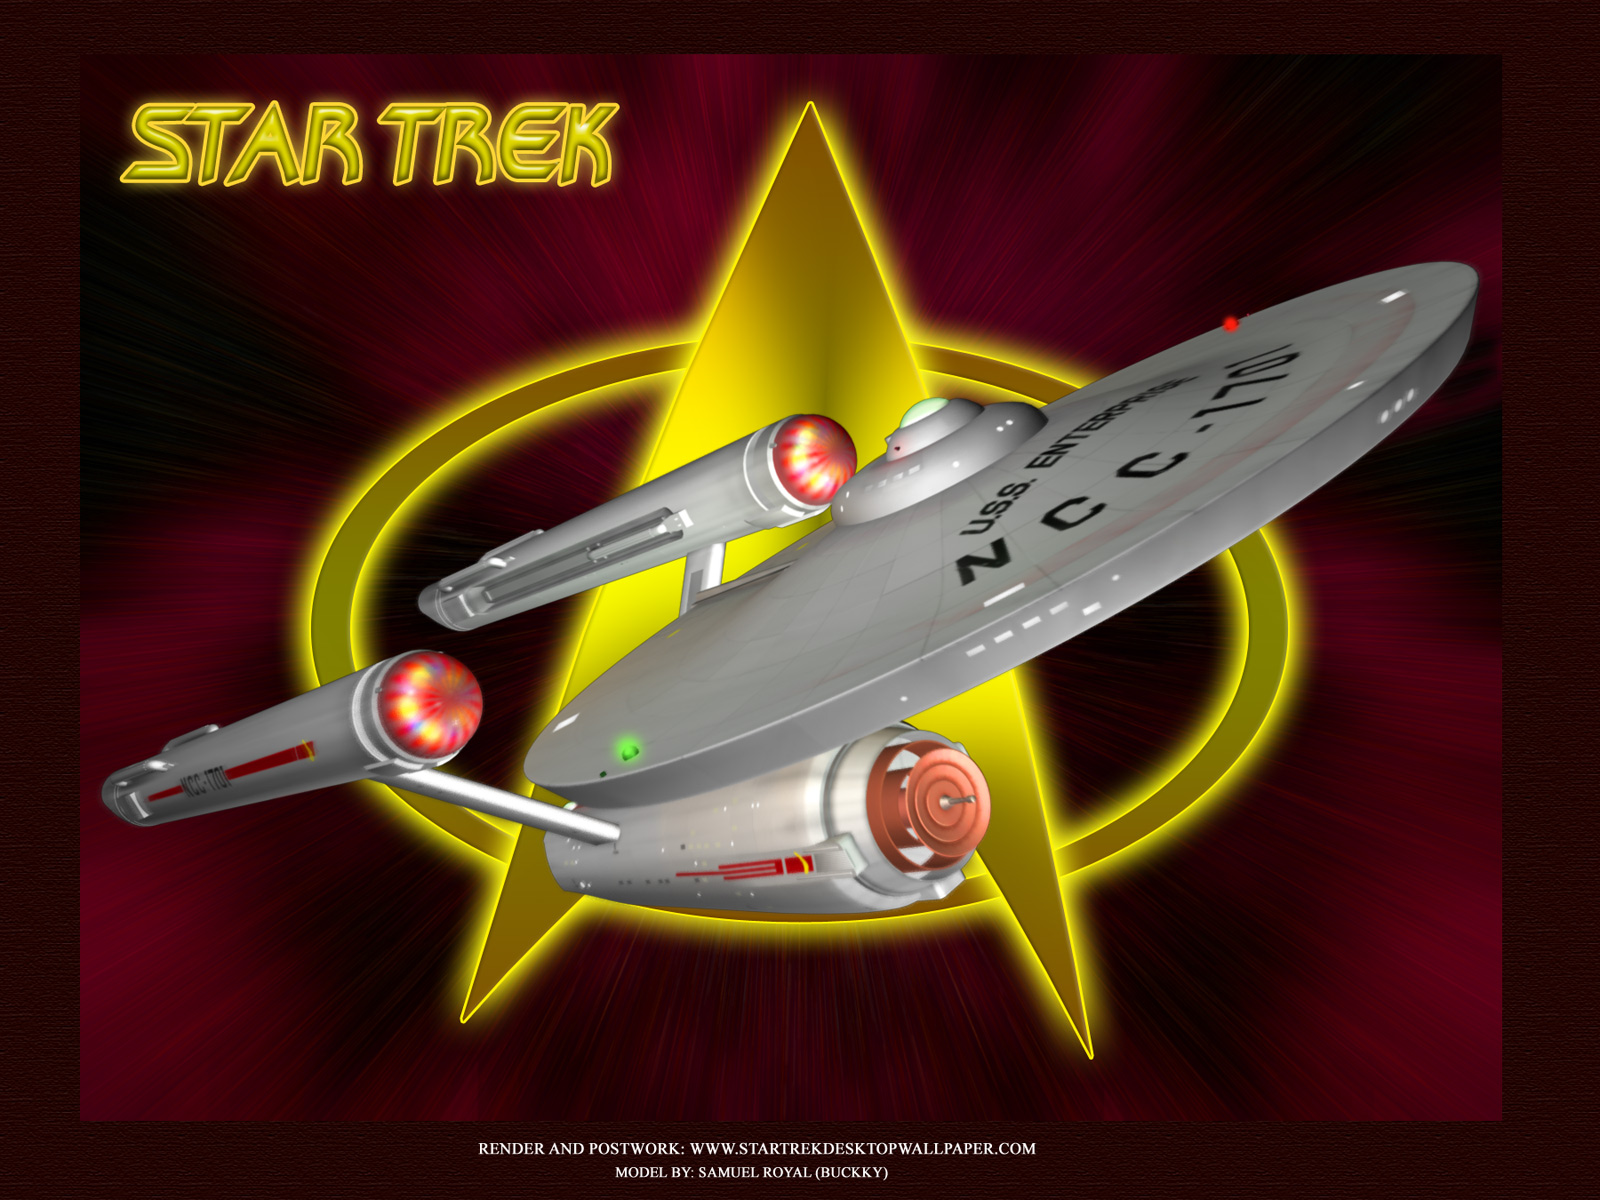 - Star Trek Original Series - free Star Trek computer desktop wallpaper, pictures, images.